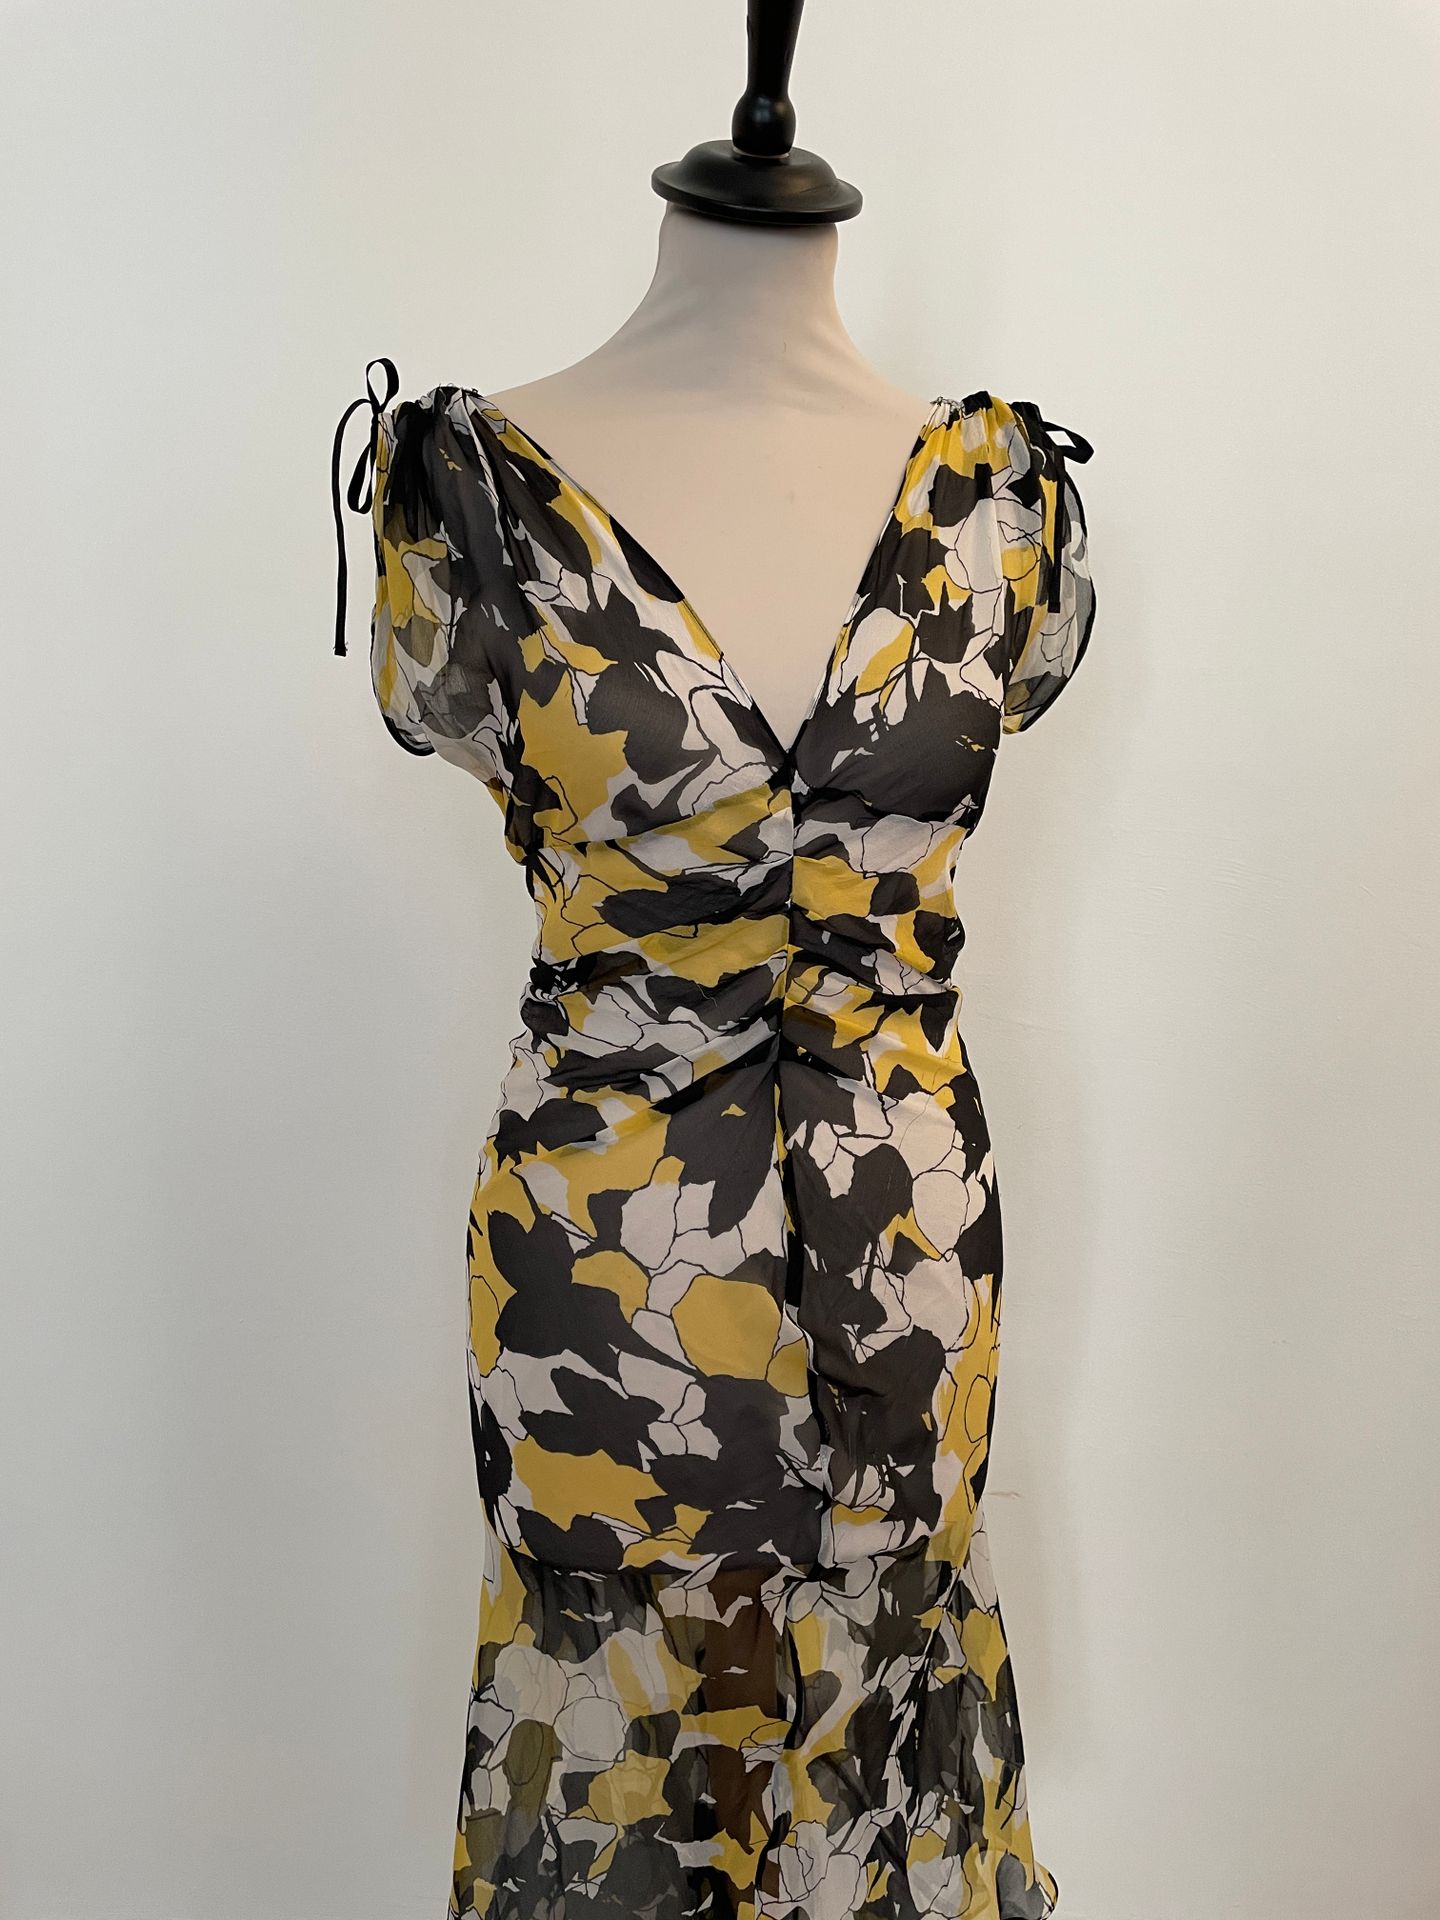 Null DIANE VON FURSTERBERG

黄色、黑色和白色花朵图案的轻量级丝绸连衣裙。

T.2

衣服底部缺损，线头拉断。